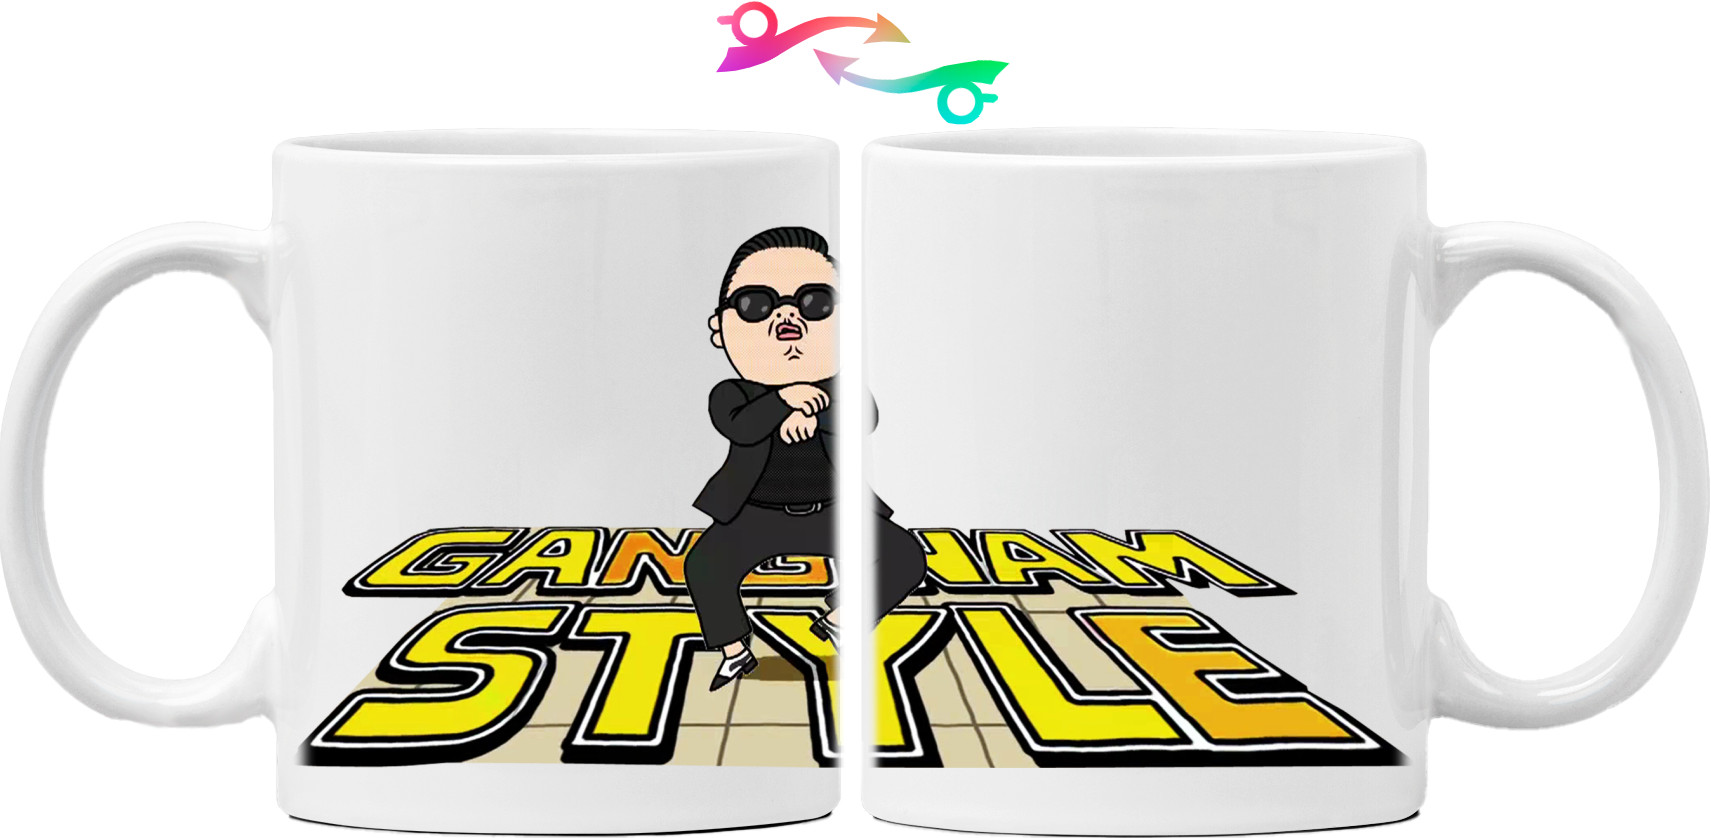 gangnam style - 2